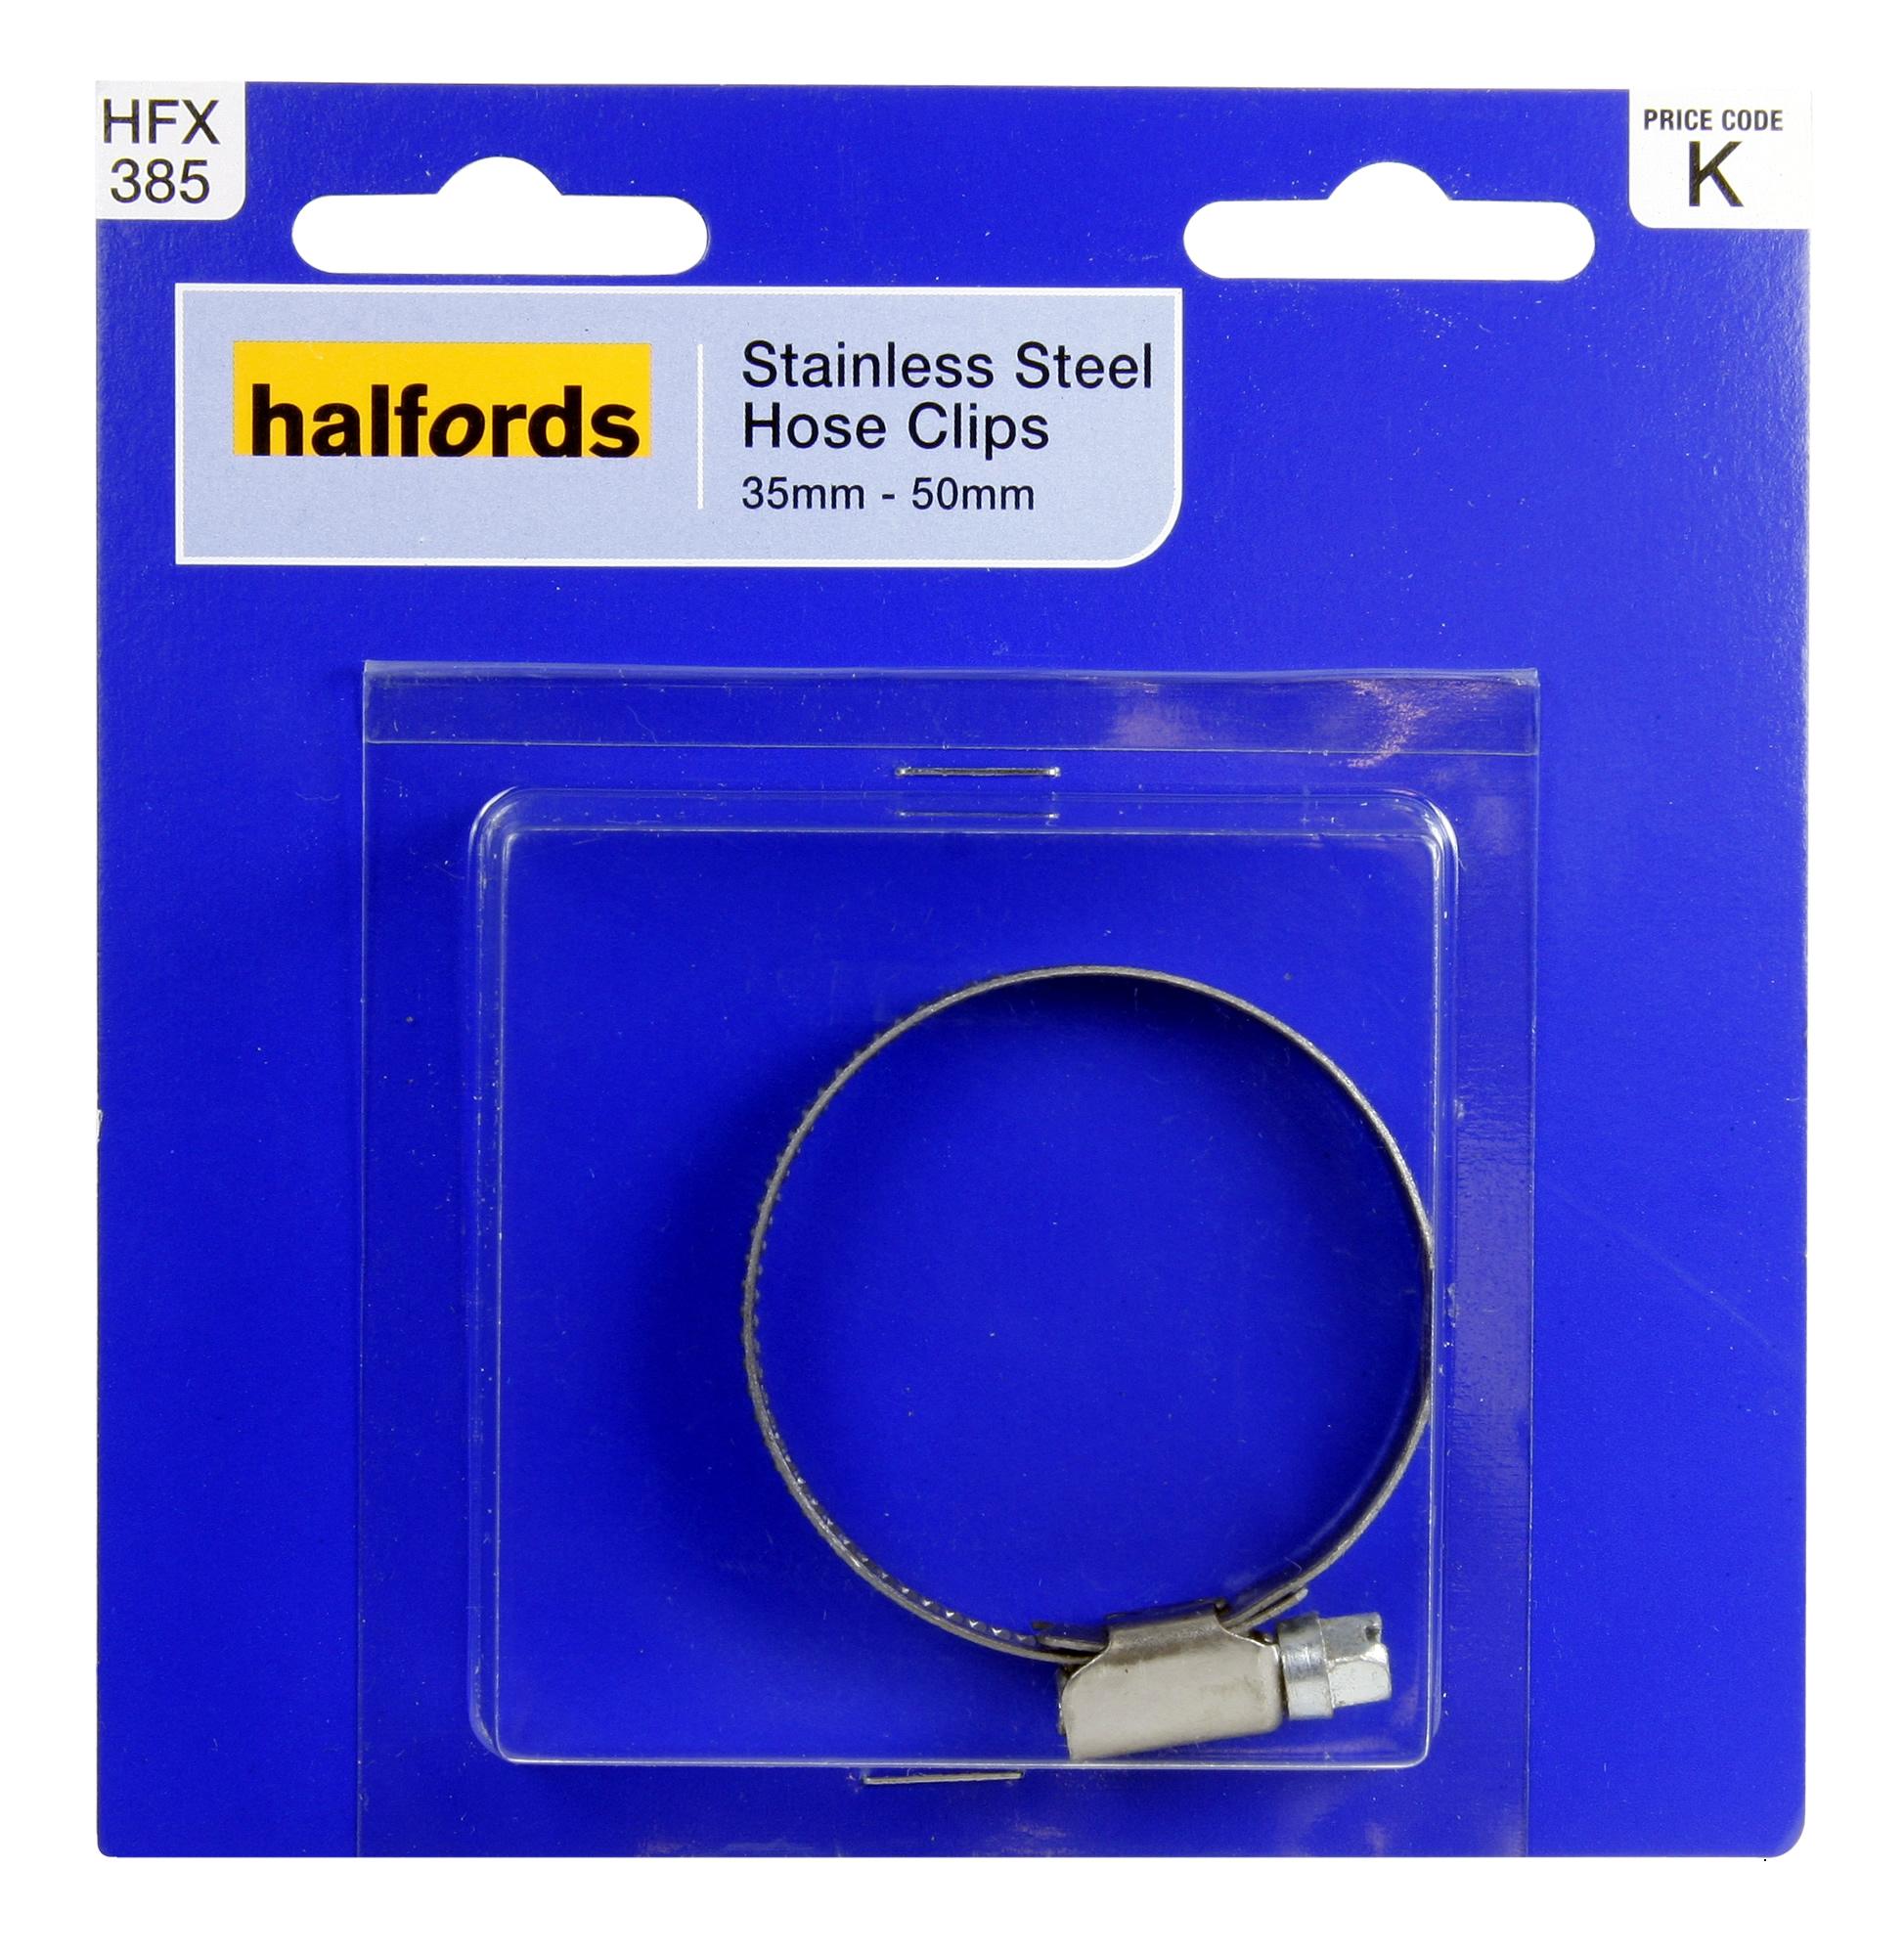 Halfords Stainless Steel Hose Clip 35-50Mm Hfx385